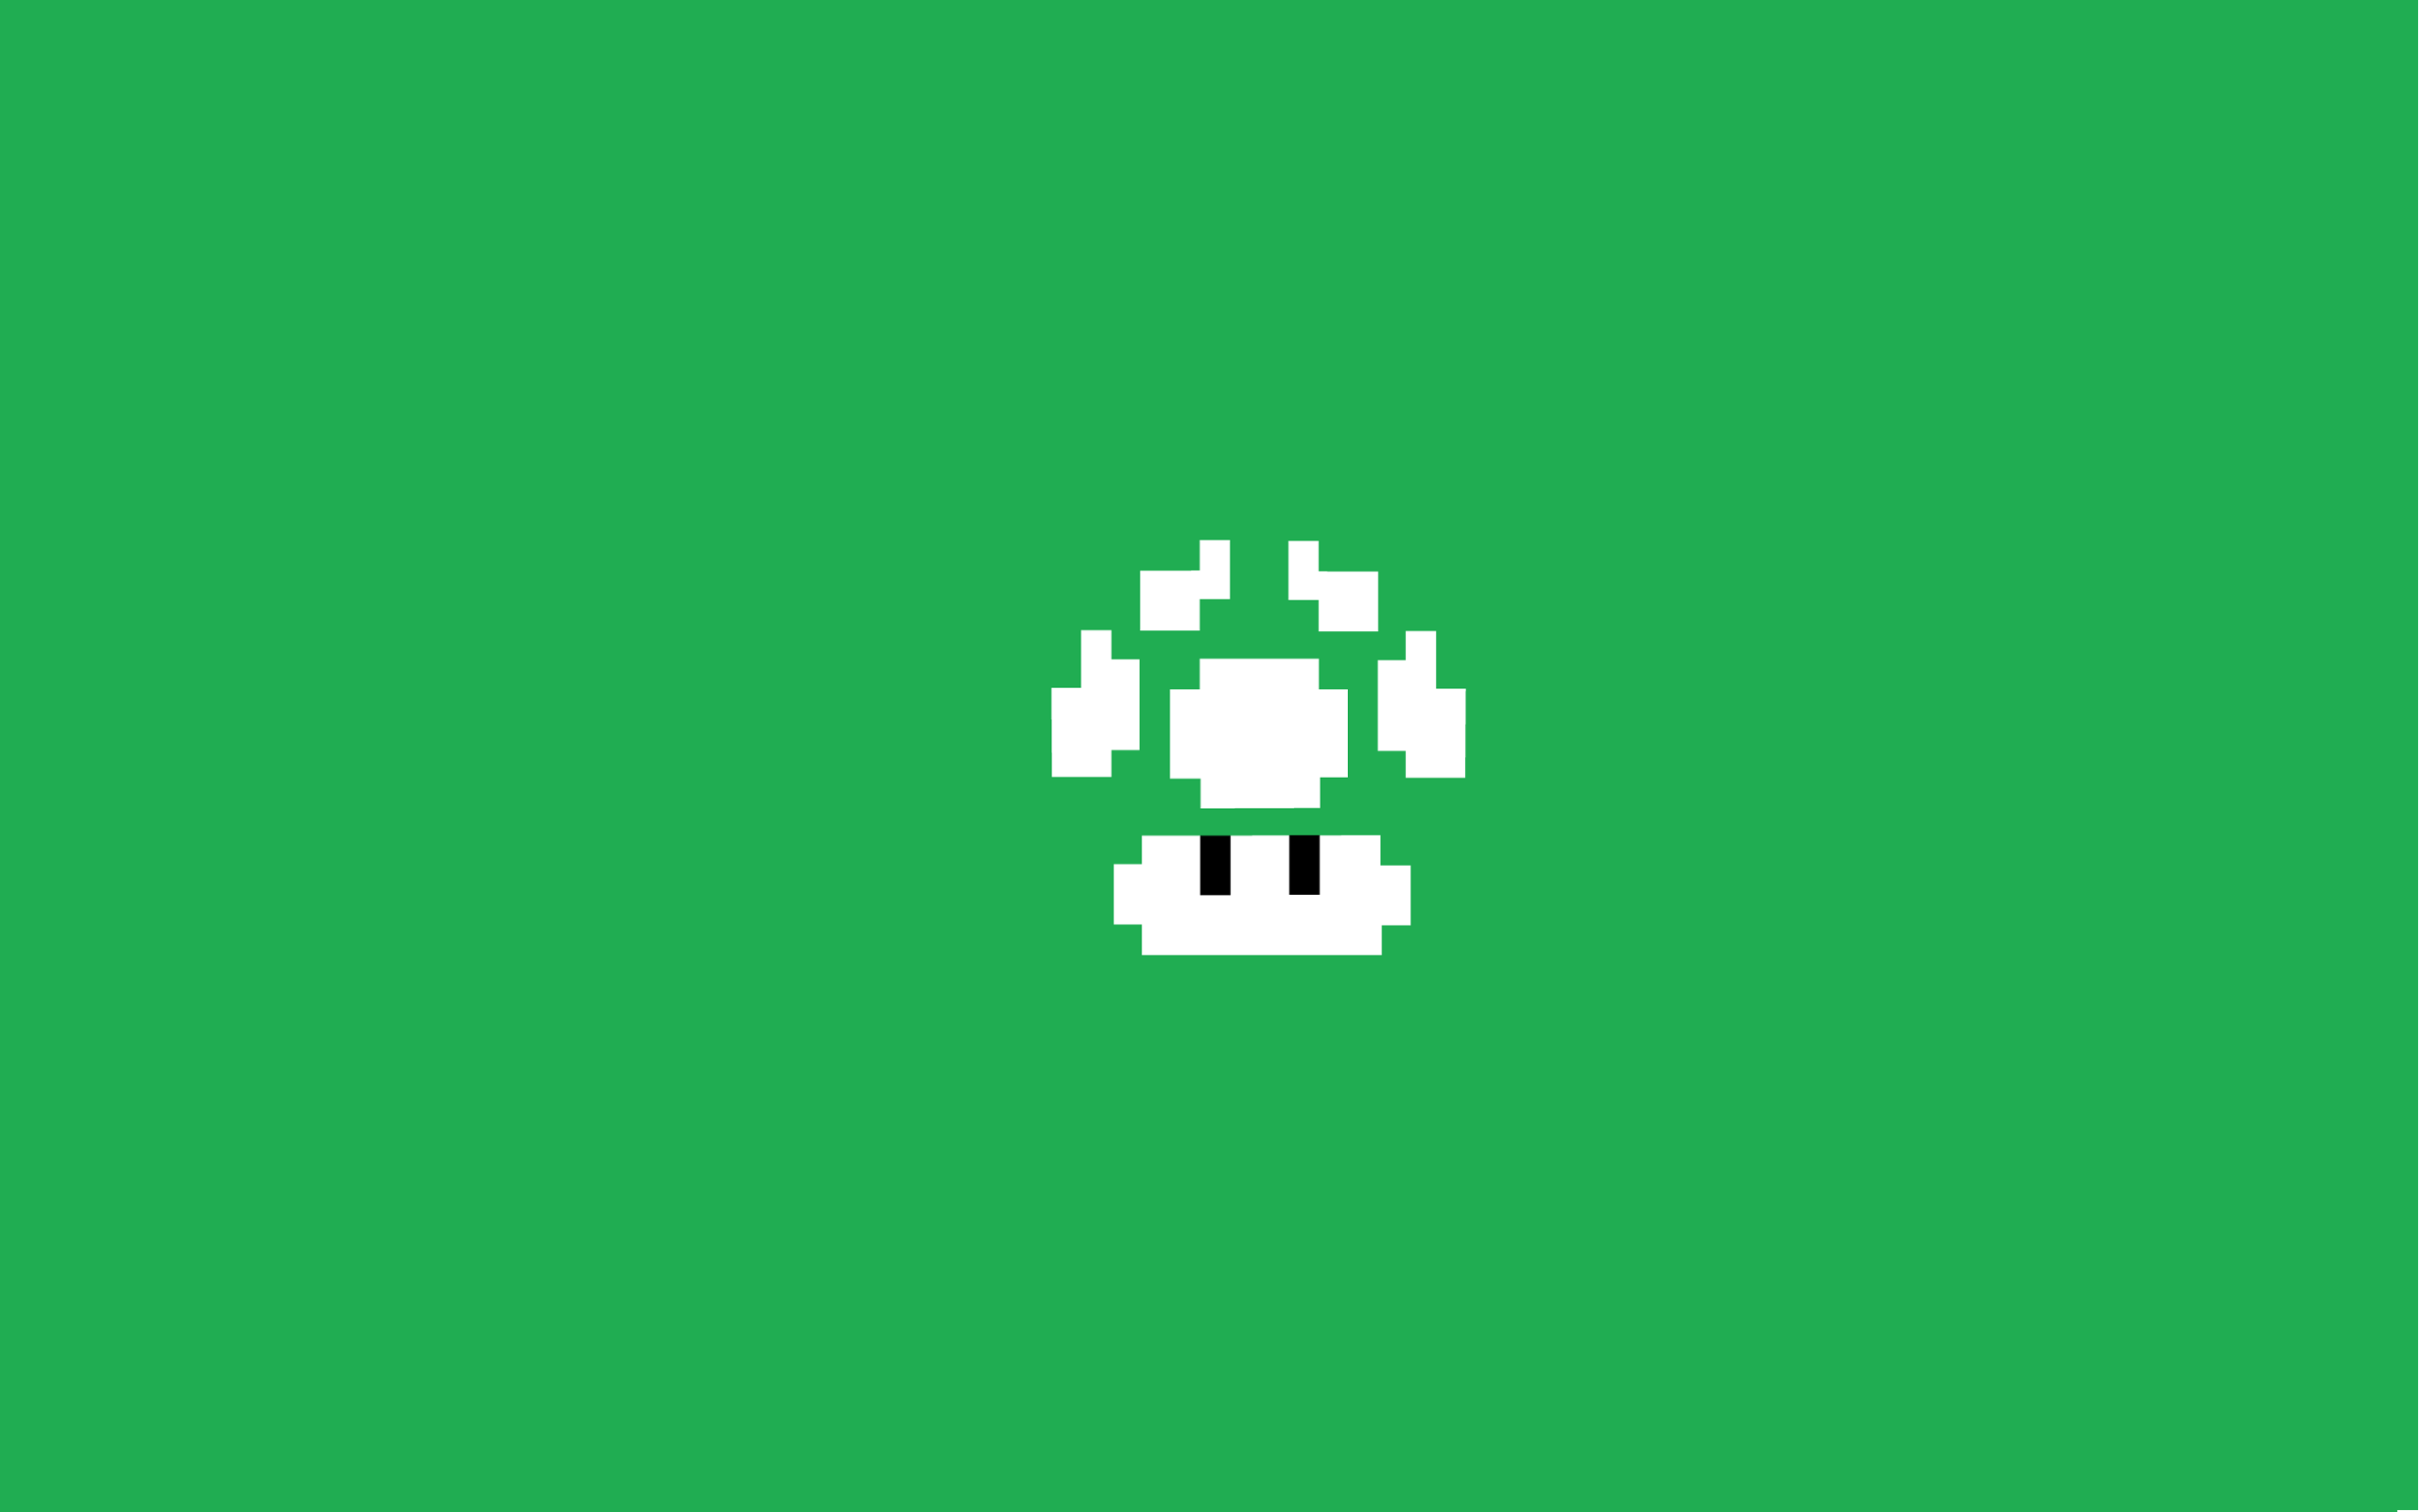 Super Mario Mario Bros Super Mario Bros 1 Up Pixel Art Minimalism Video Games Pixels 2560x1600